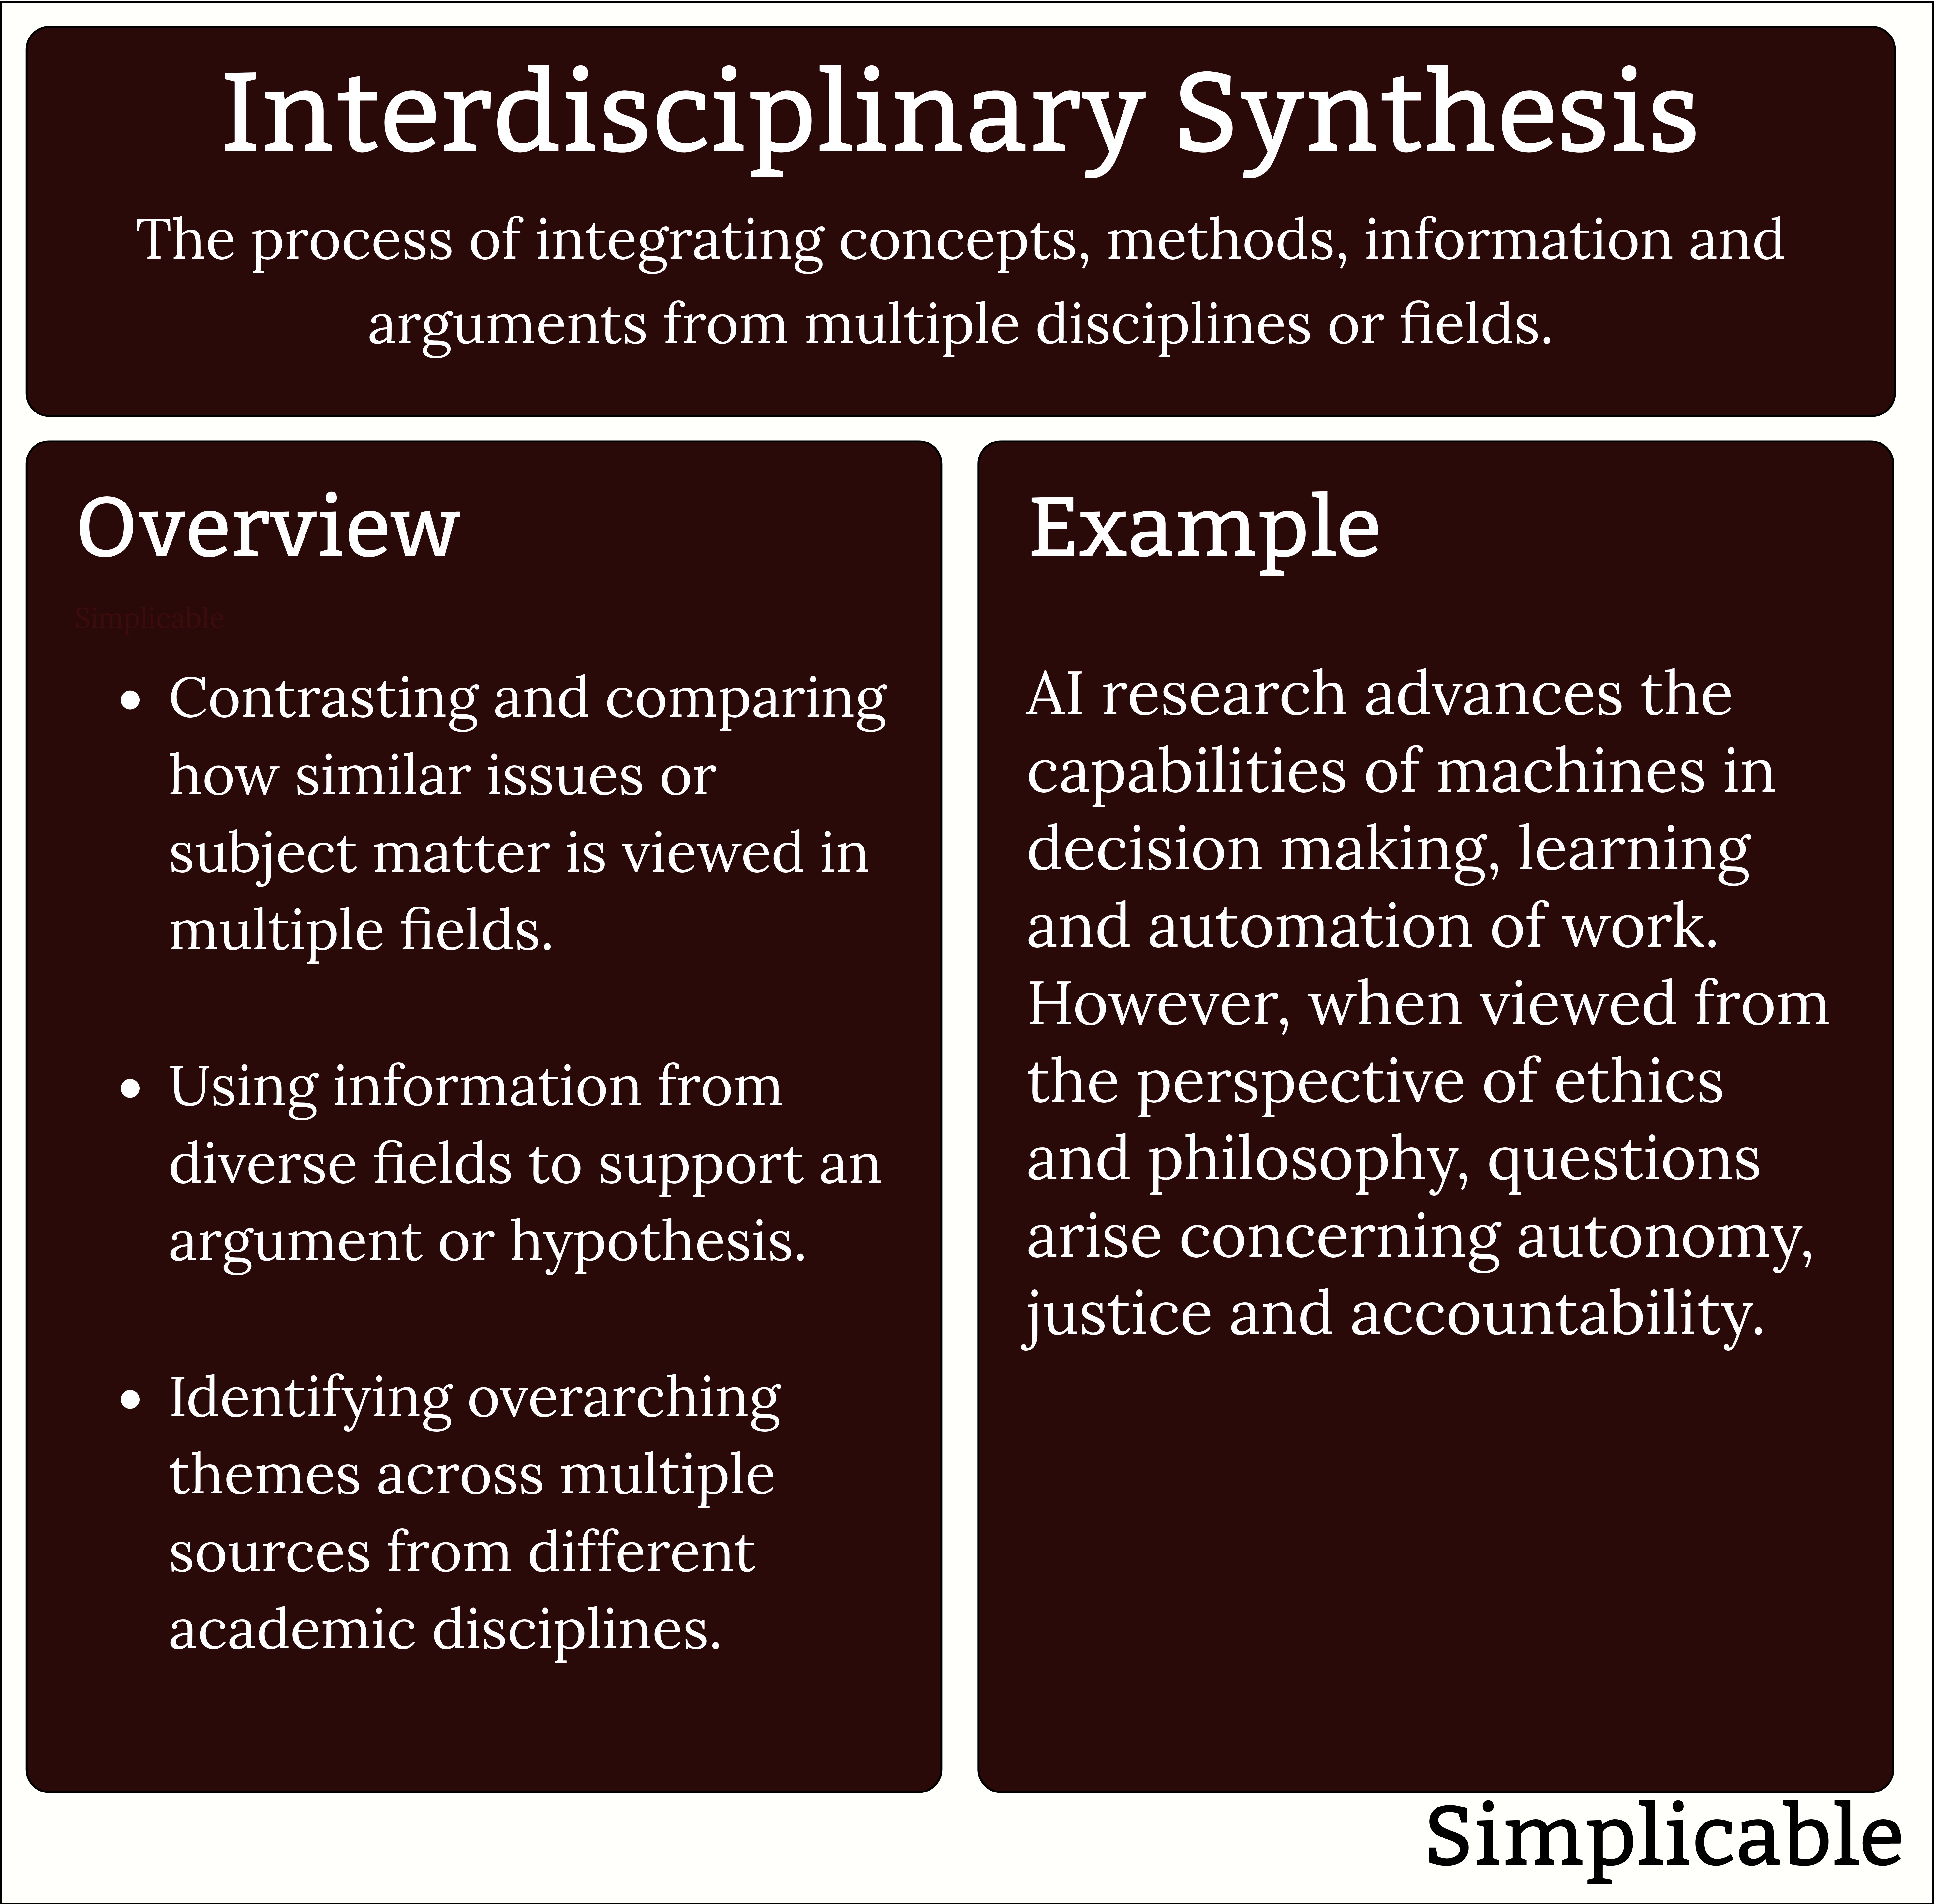 interdisciplinary synthesis summary and example